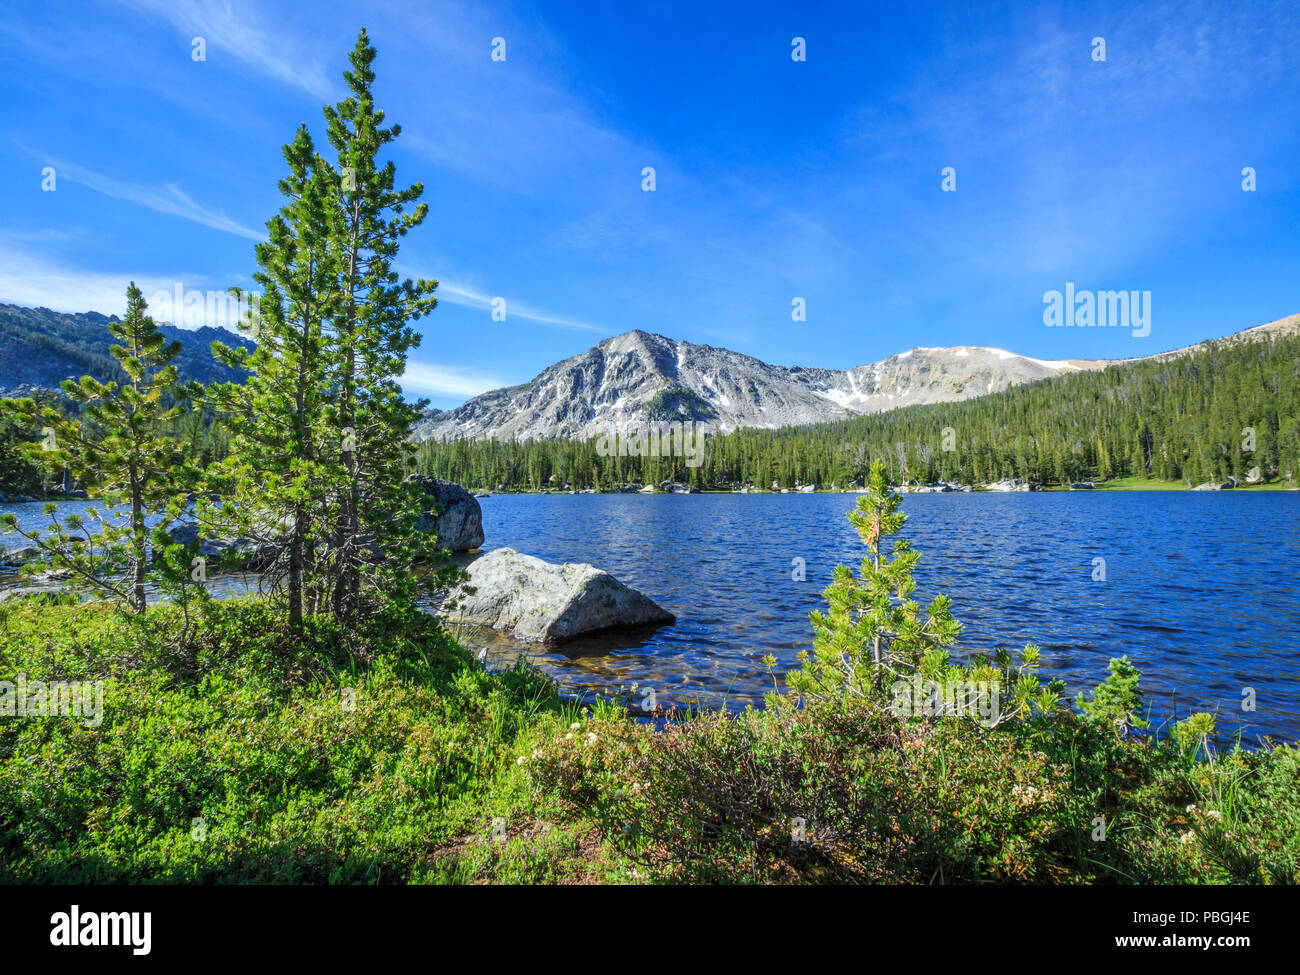 lake abundance in the pioneer mountains near melrose, montana Stock Photo